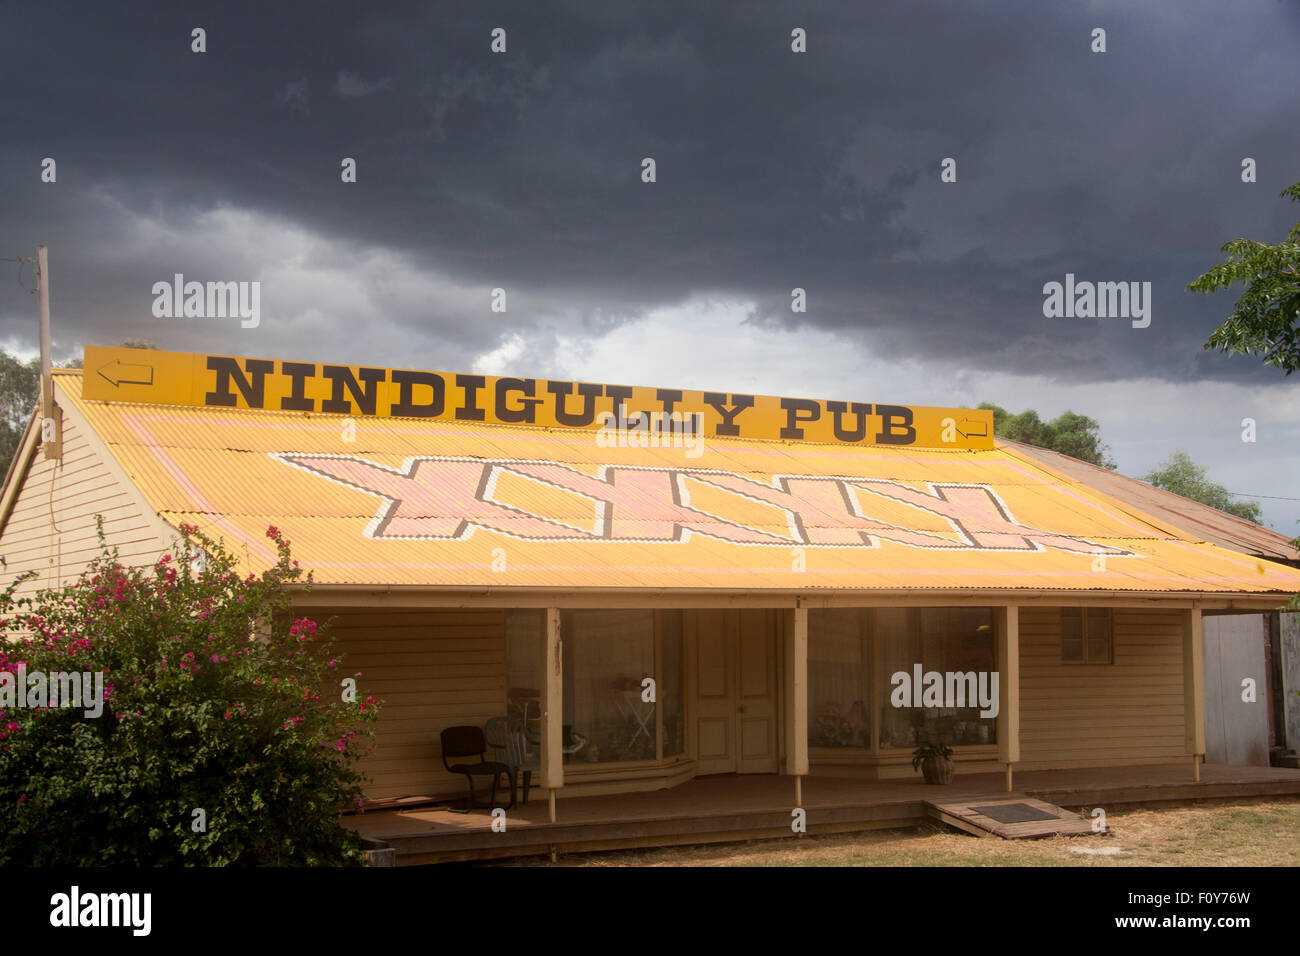 Nindigully pub and Castlemaine XXXX beer sign on roof of house Nindigully Queensland Qld Australia Stock Photo